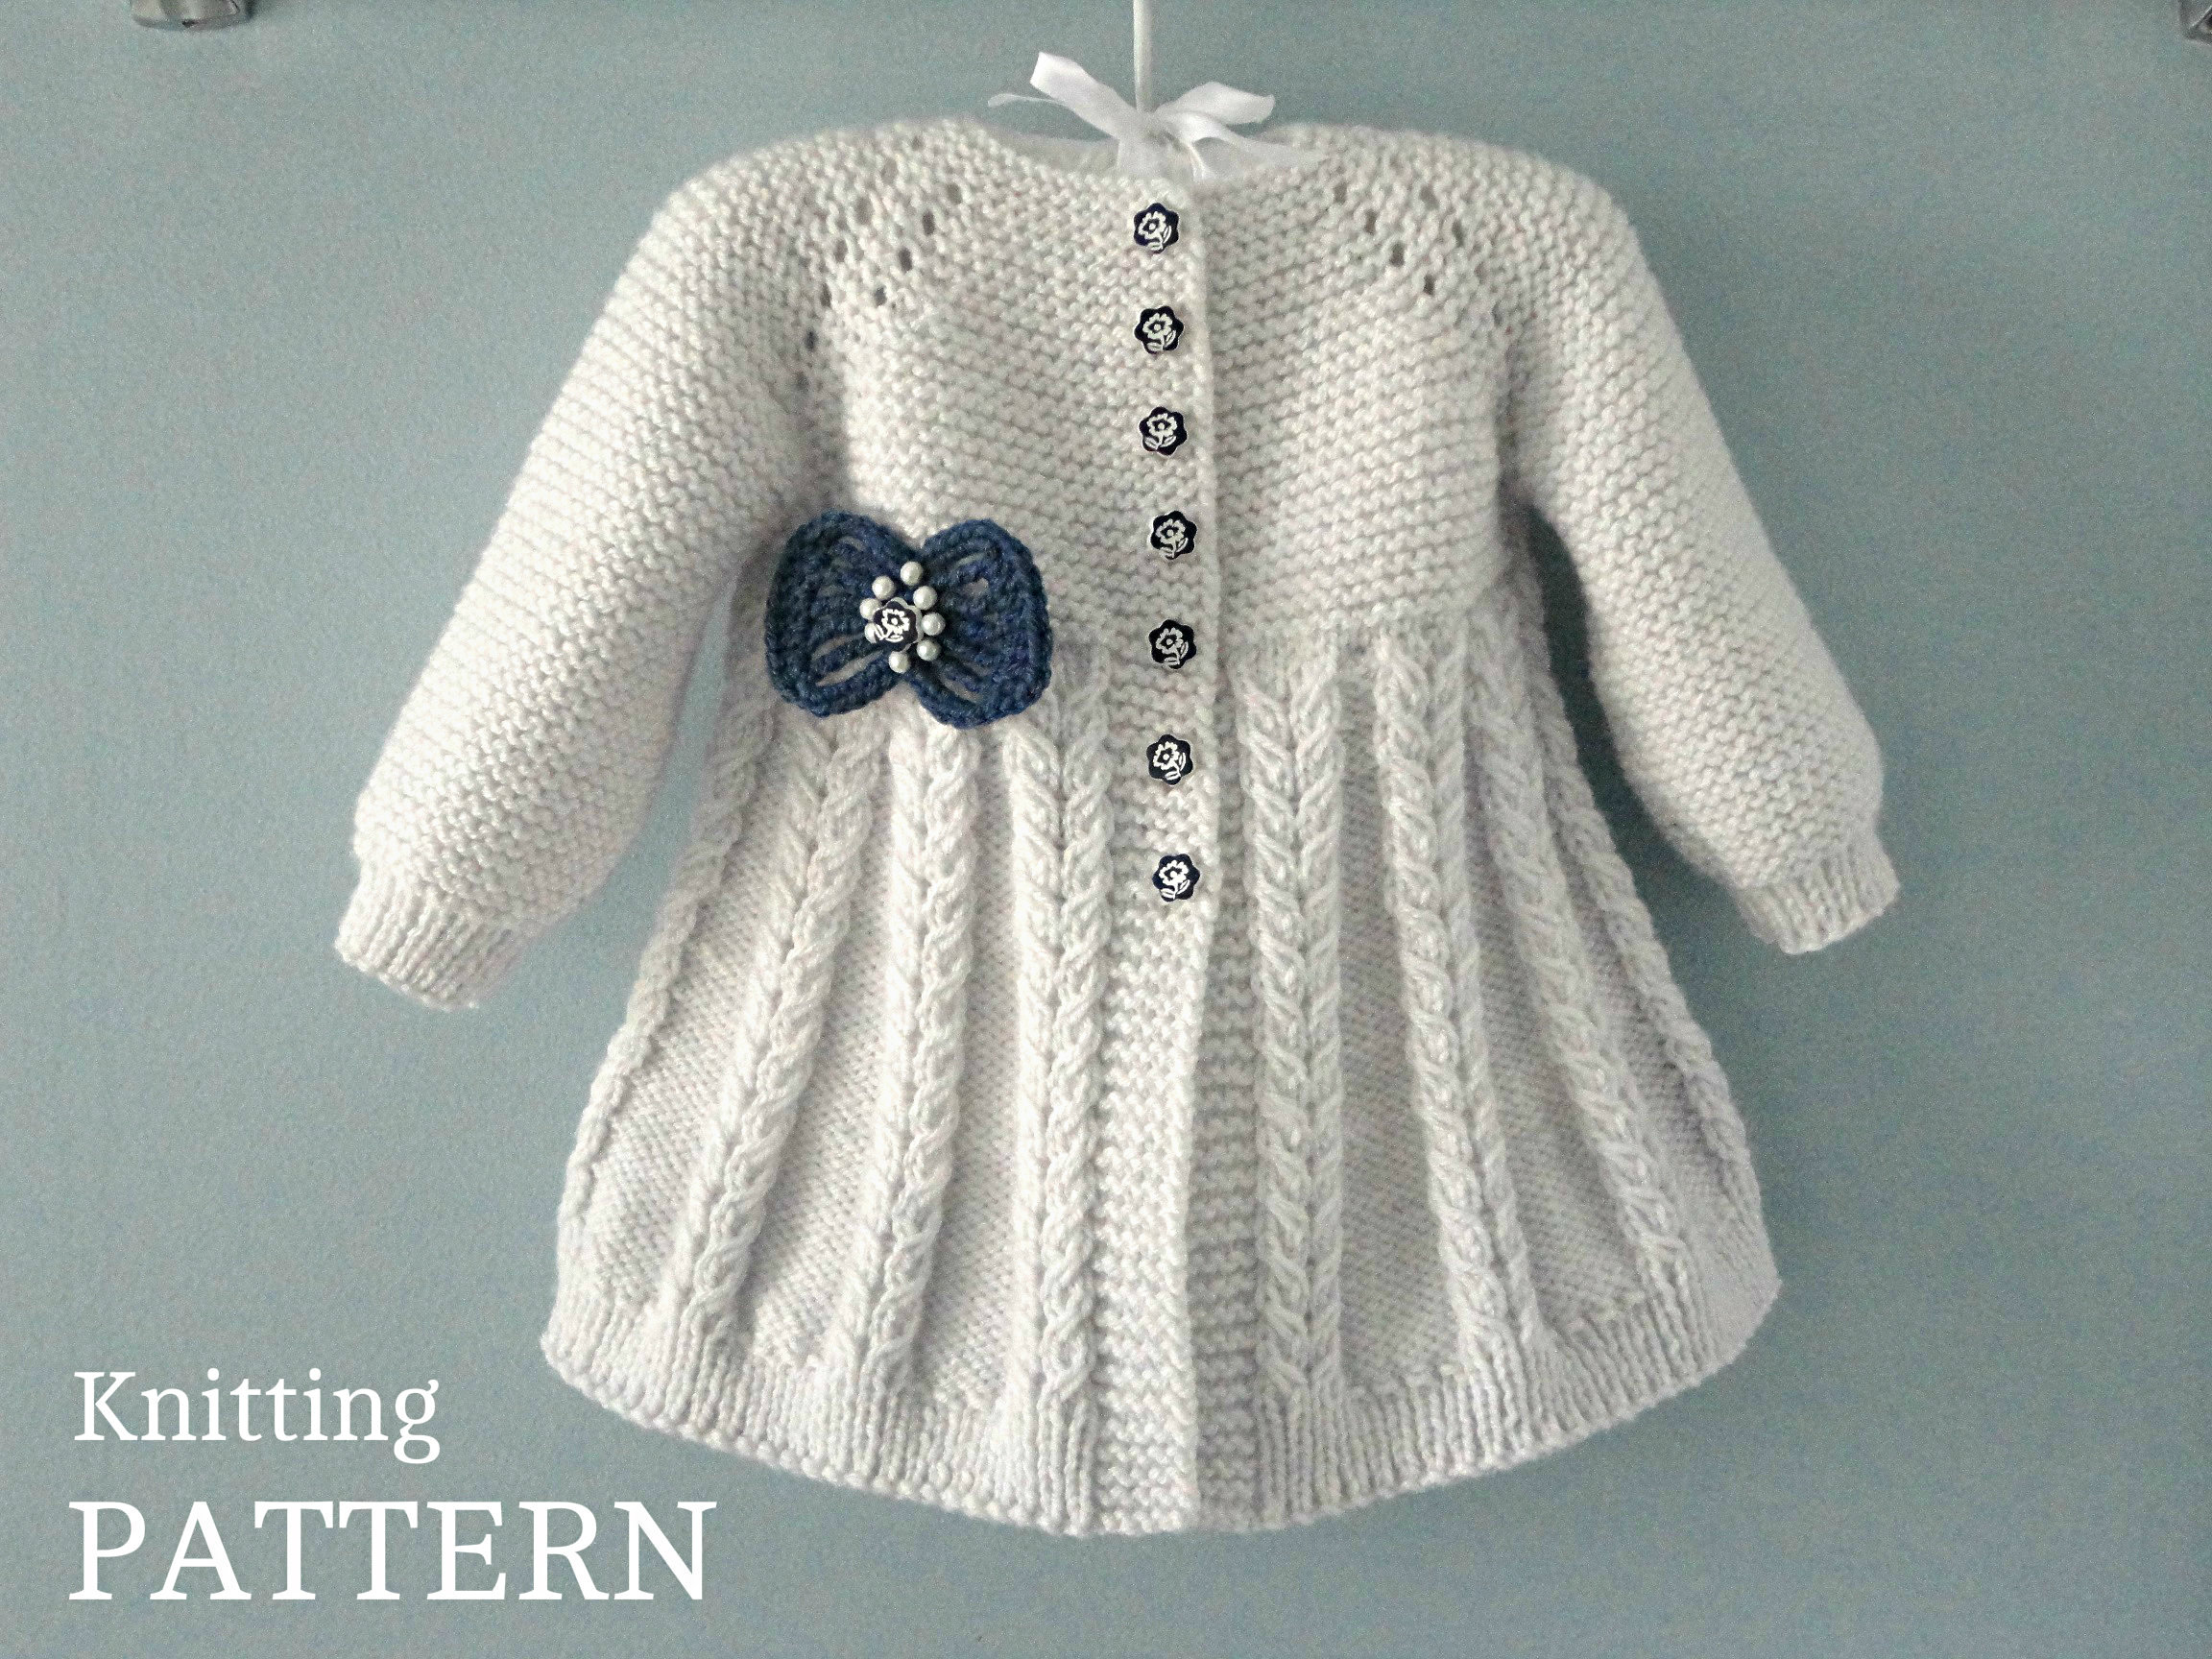 Knitting Pattern Baby Sweater Knitting Pattern Ba Jacket Knitted Ba Cardigan Knitted Cables Ba Jacket Knit Ba Sweater Ba Girl Outfit Pattern In English Pdf